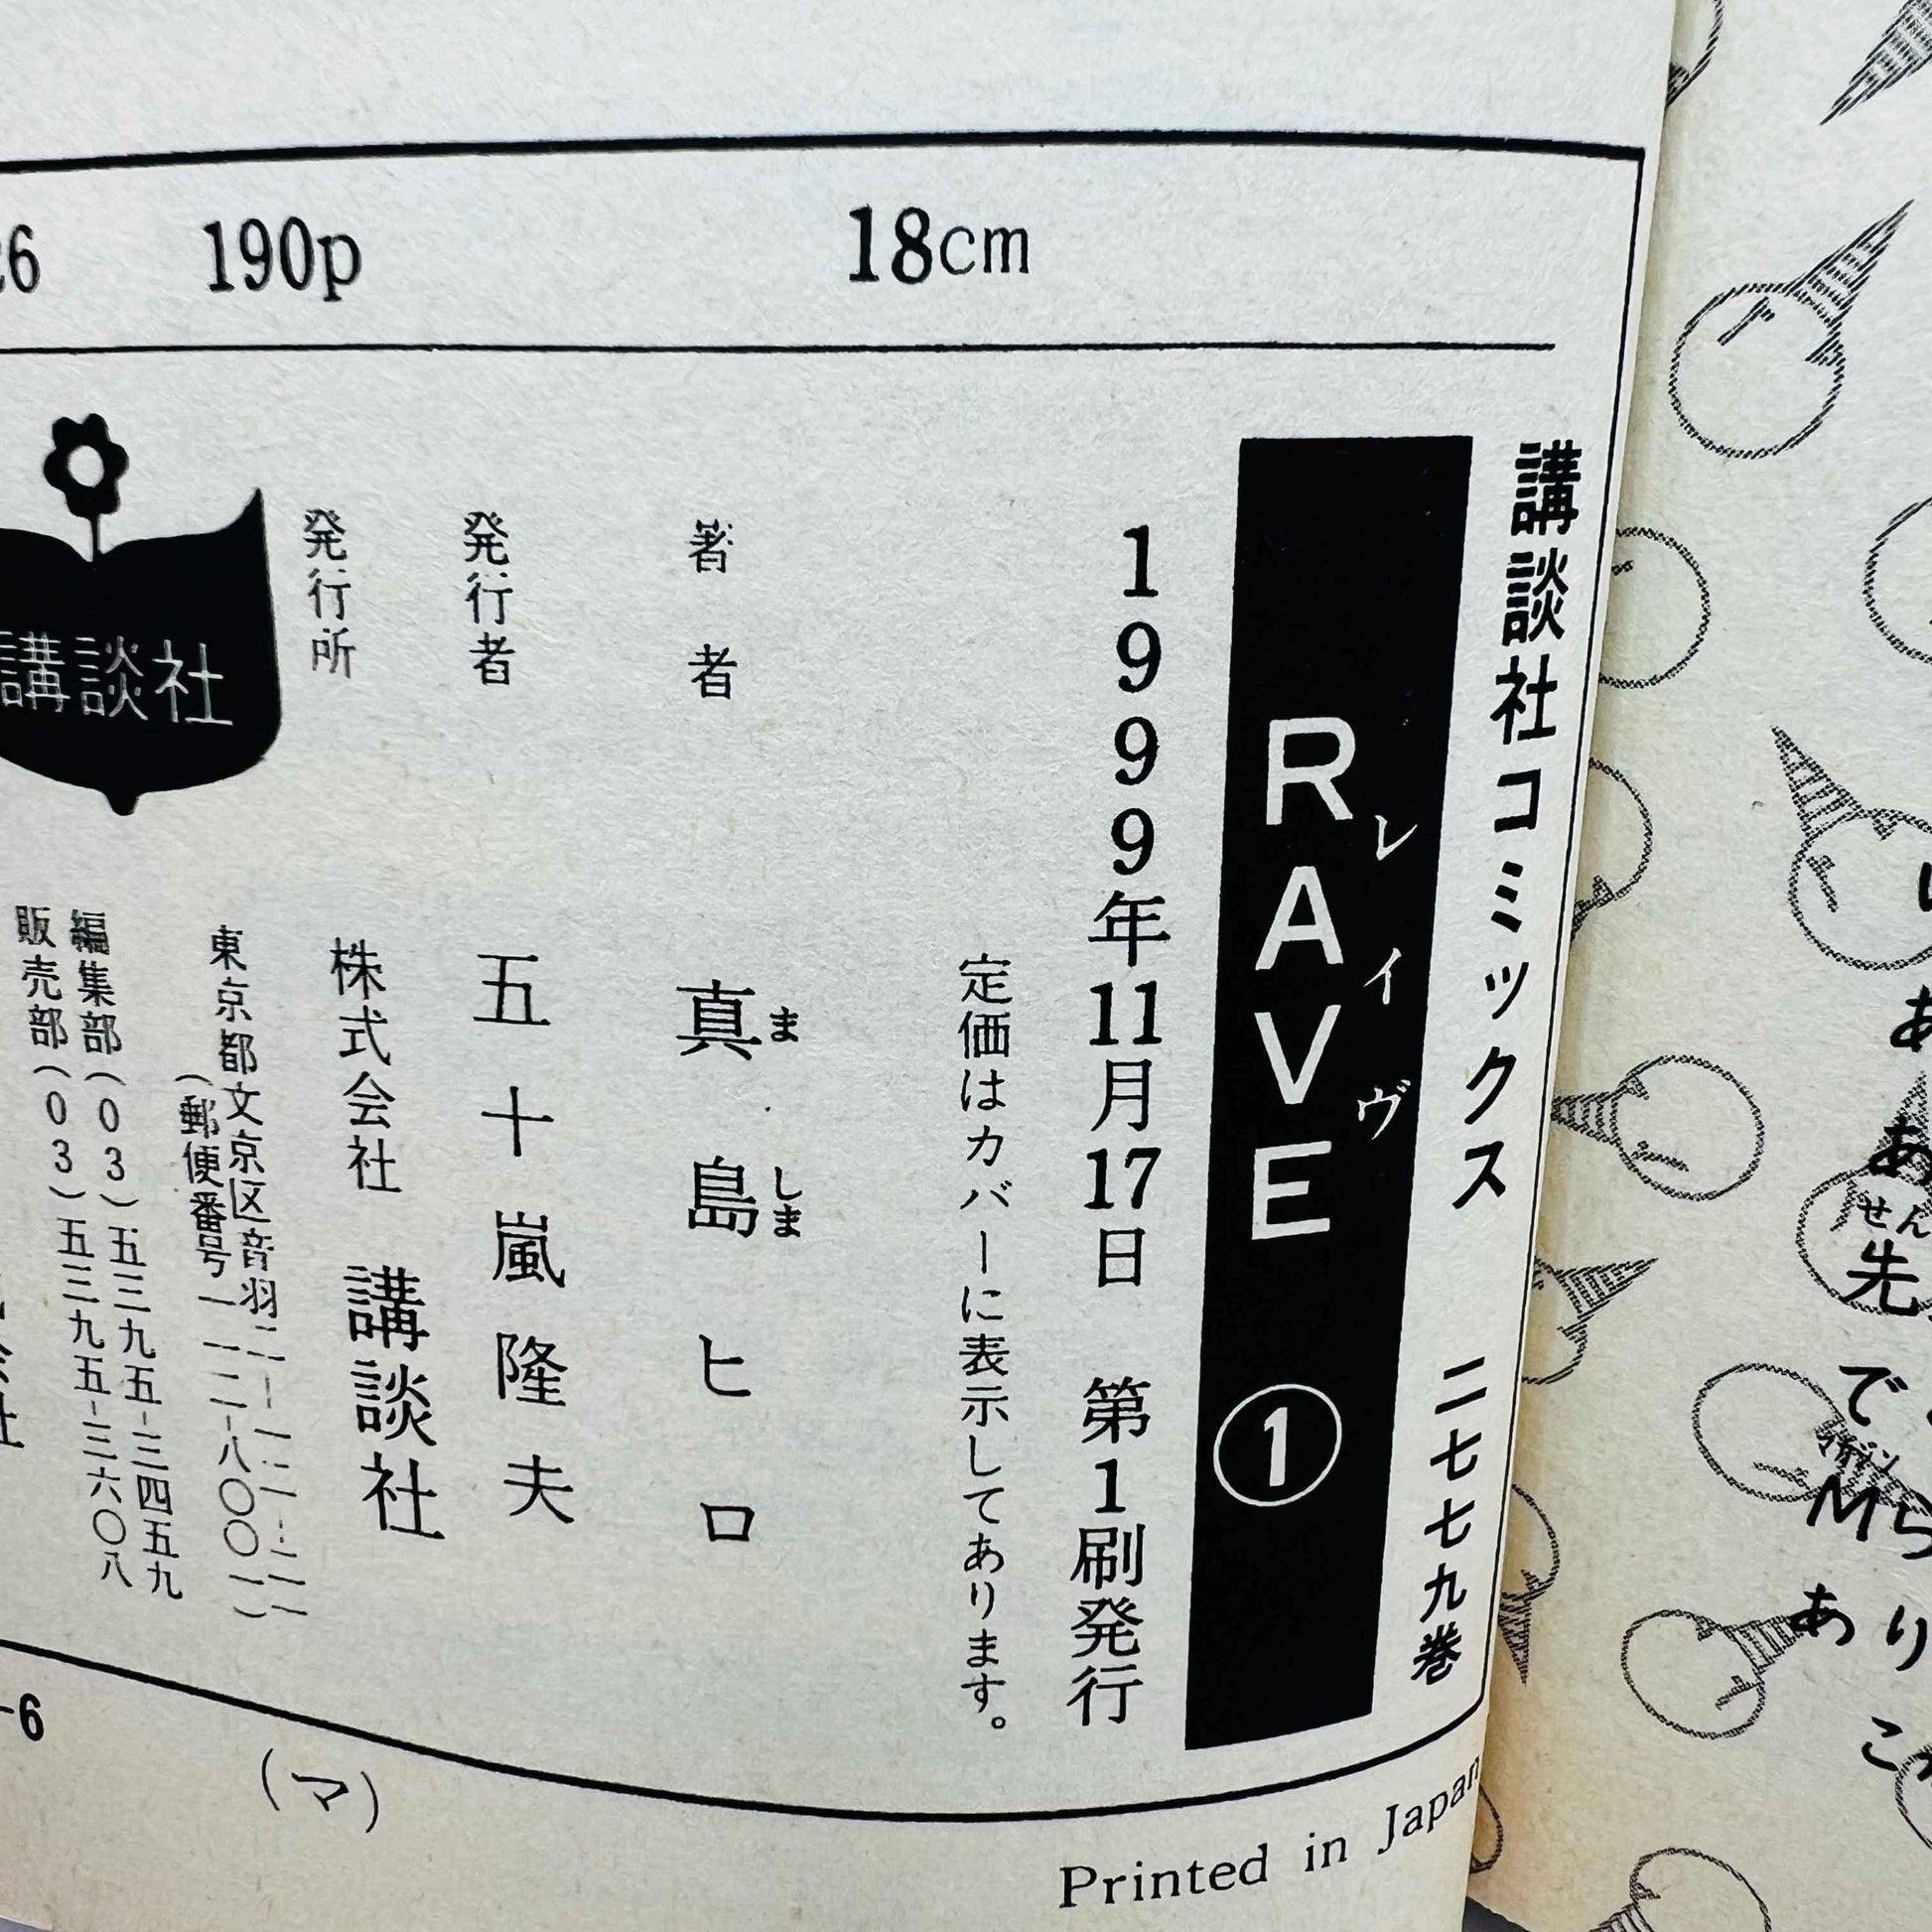 Rave - Volume 01 - 1stPrint.net - 1st First Print Edition Manga Store - M-RAVE-01-001